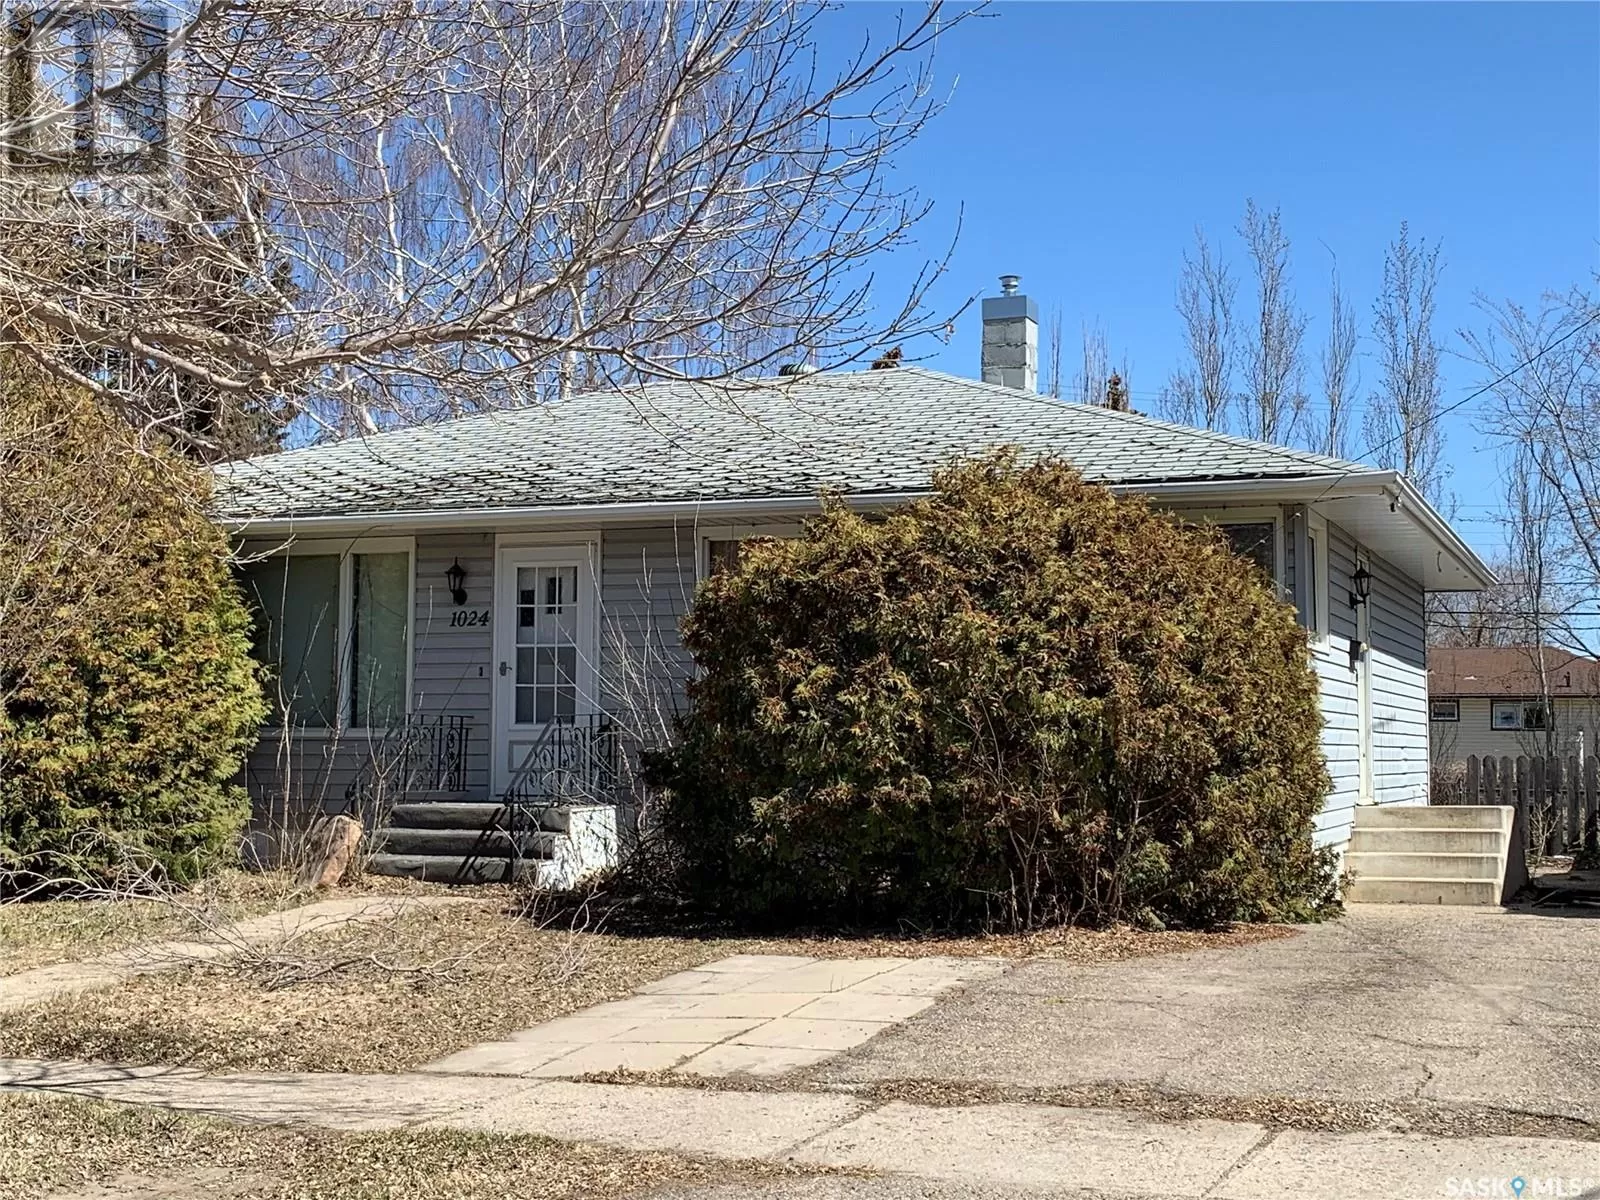 House for rent: 1024 11th Street, Humboldt, Saskatchewan S0K 2A0